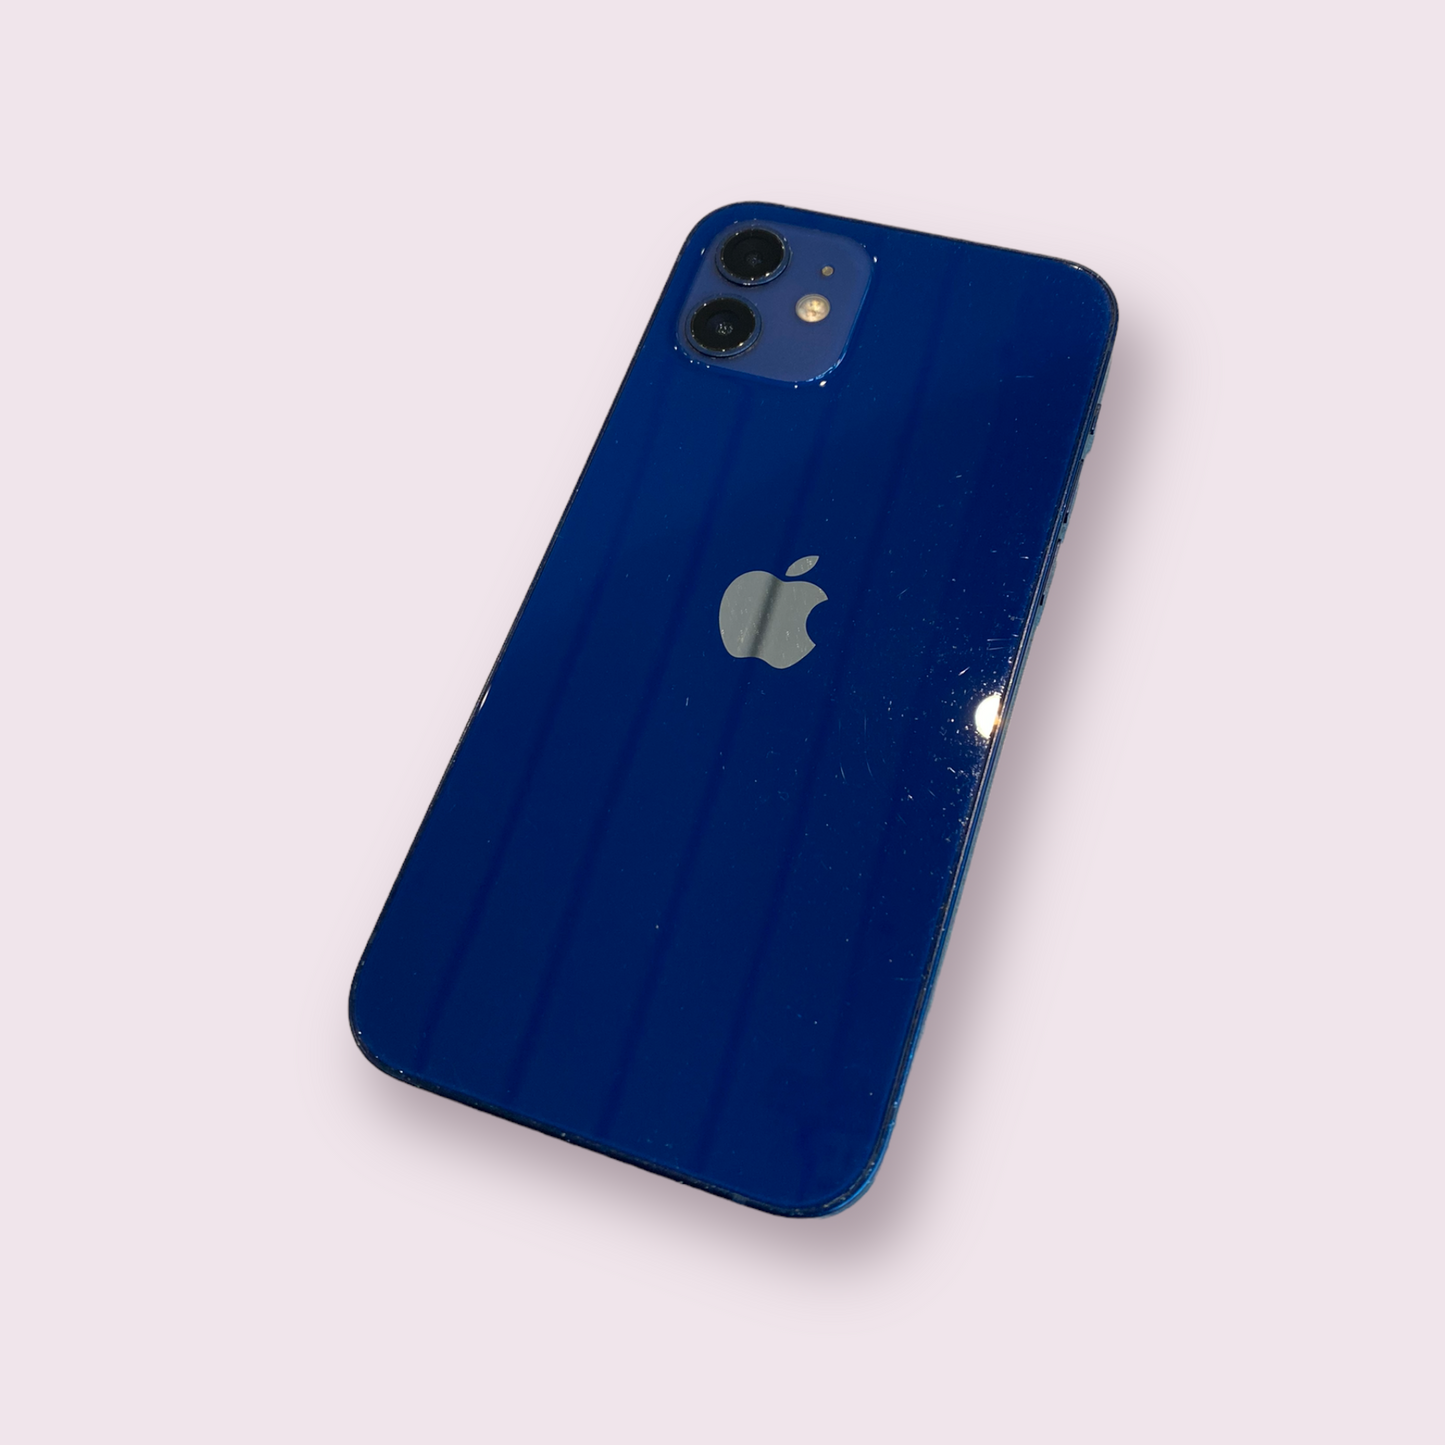 Apple iPhone 12 64GB Blue - Unlocked - Grade B - BH100%